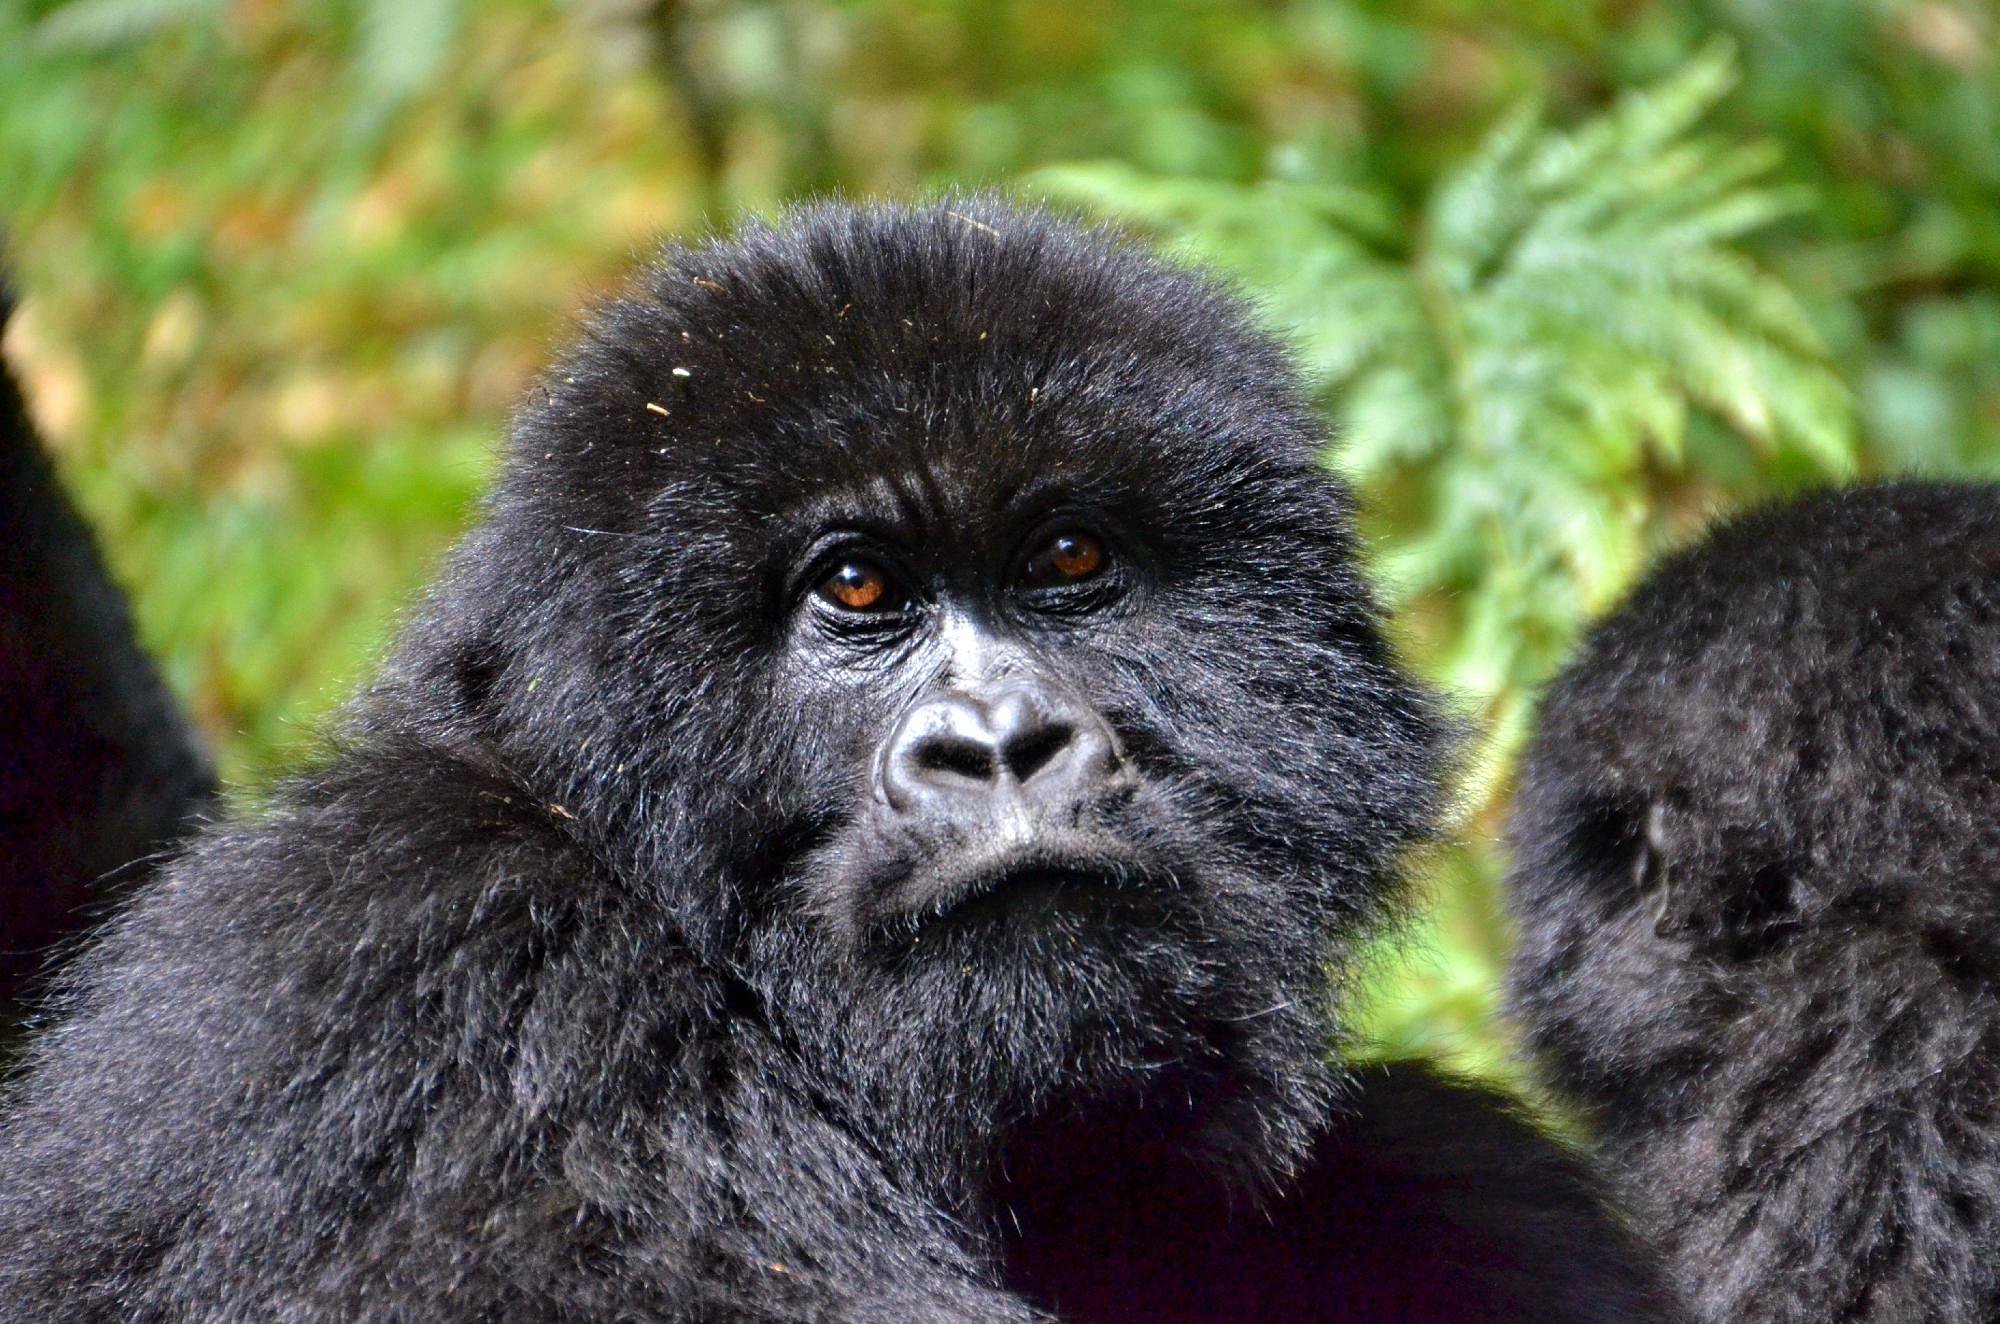 How Close Do Trekkers Get To Mountain Gorillas?